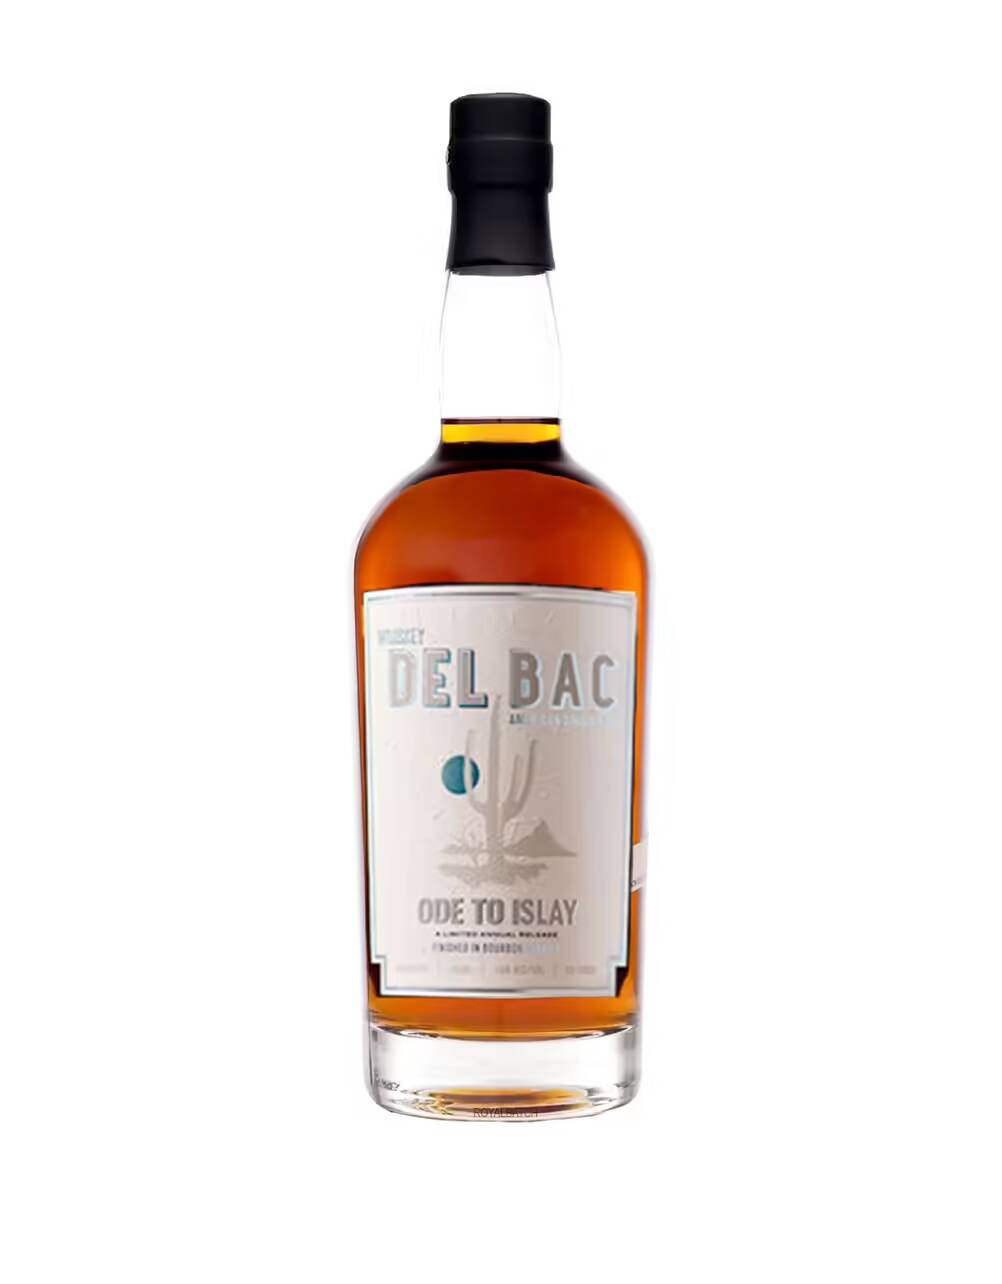 Del Bac Ode to Islay American Single Malt Whiskey